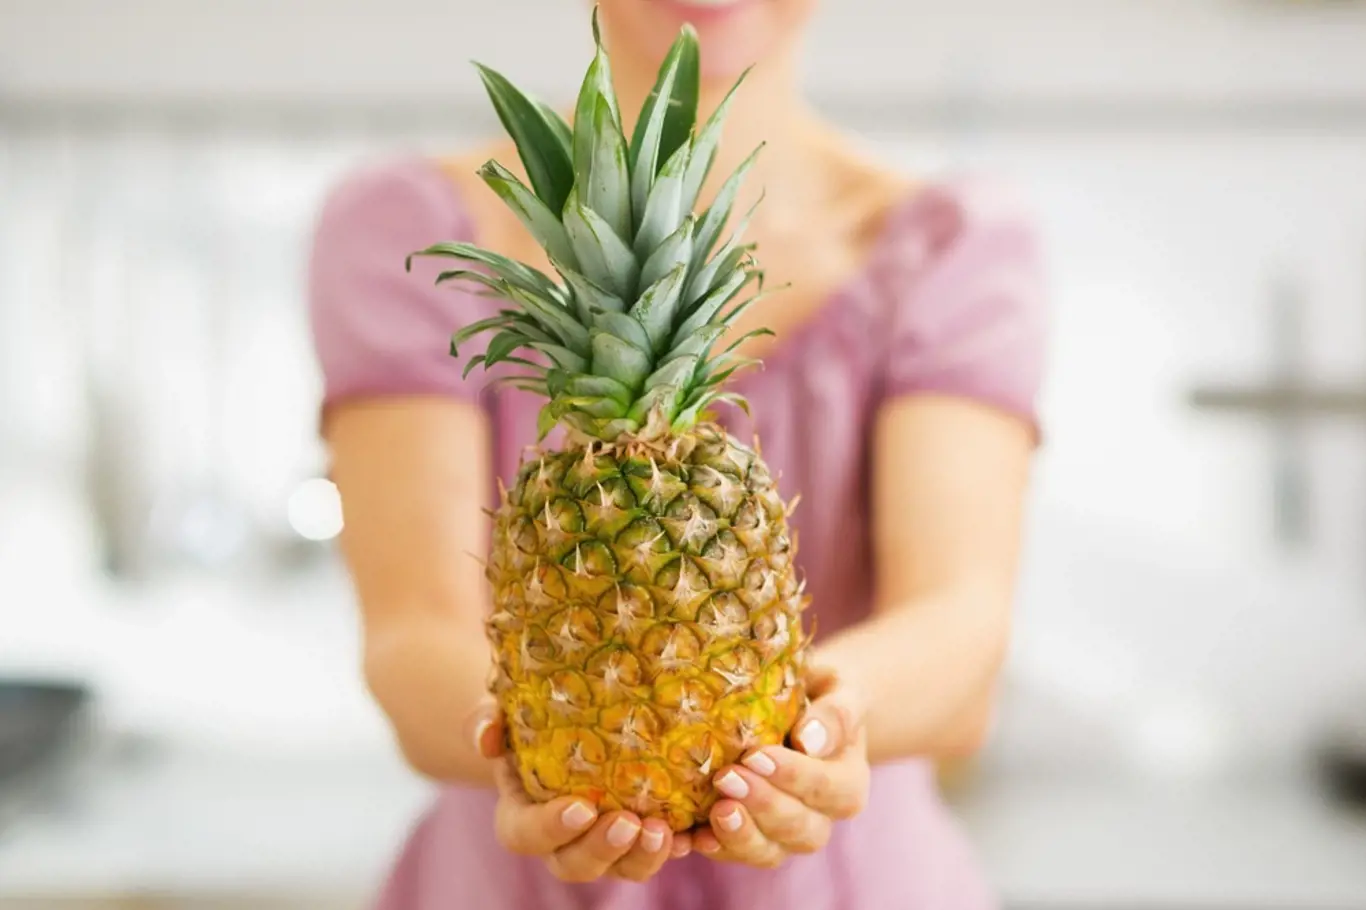 Správně vybraný ananas je zárukou dobré chuti